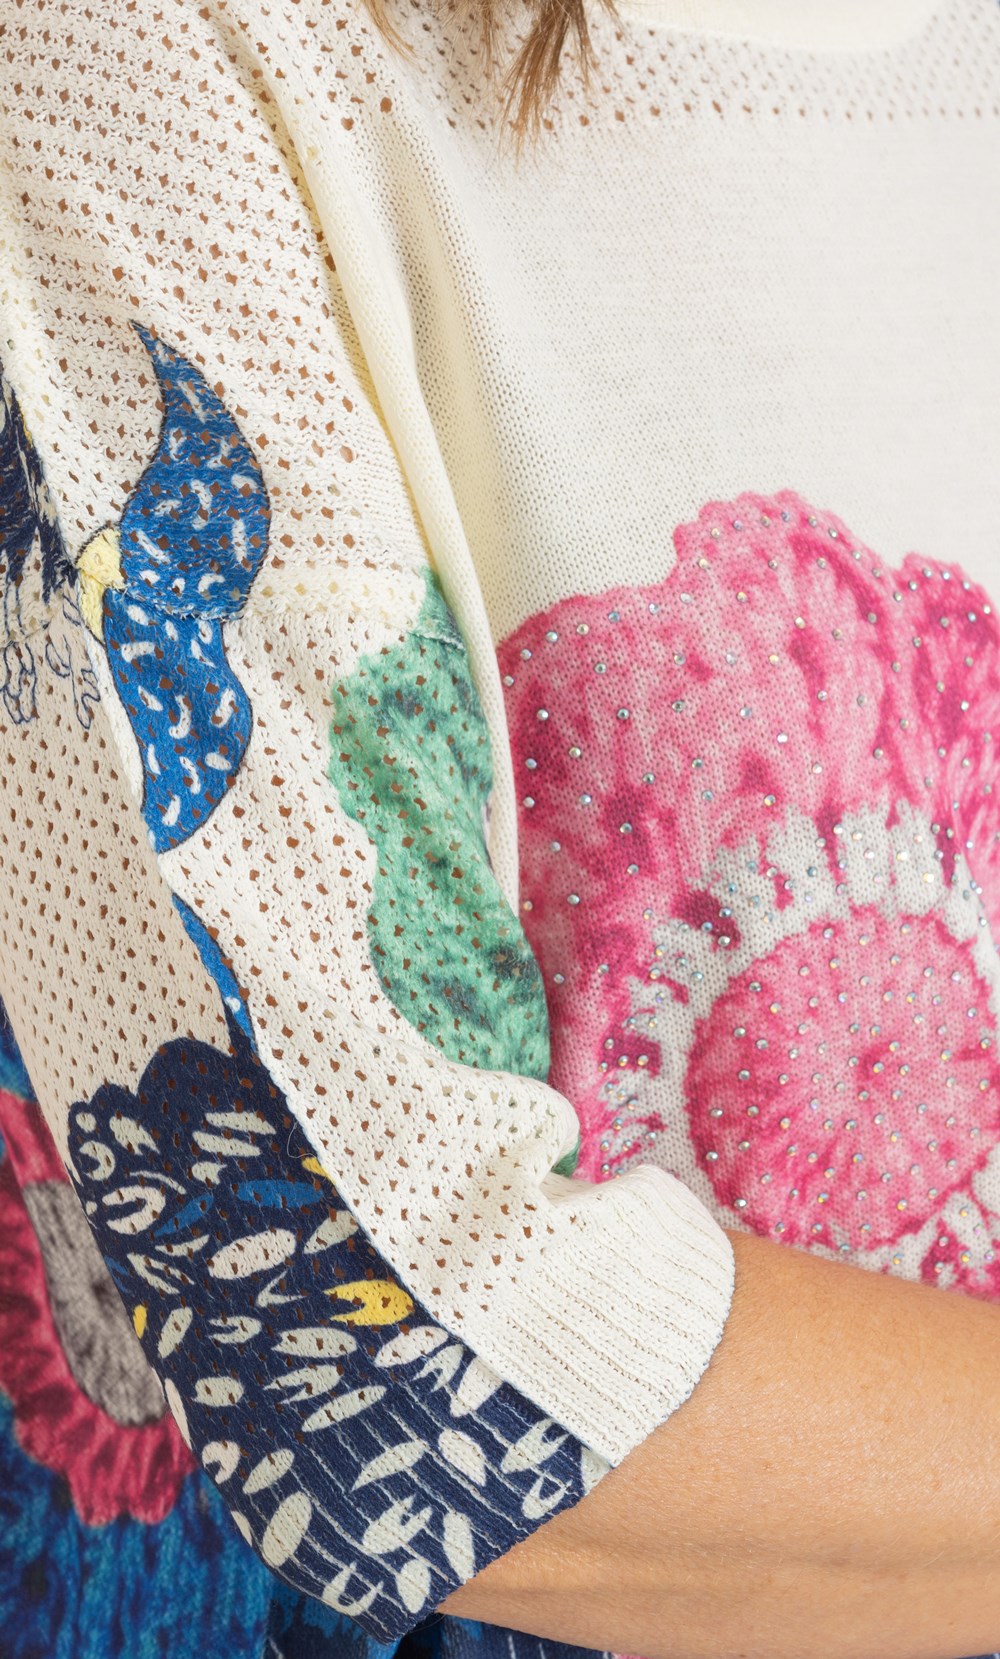 Anna Rose Embellished Printed Knit Top